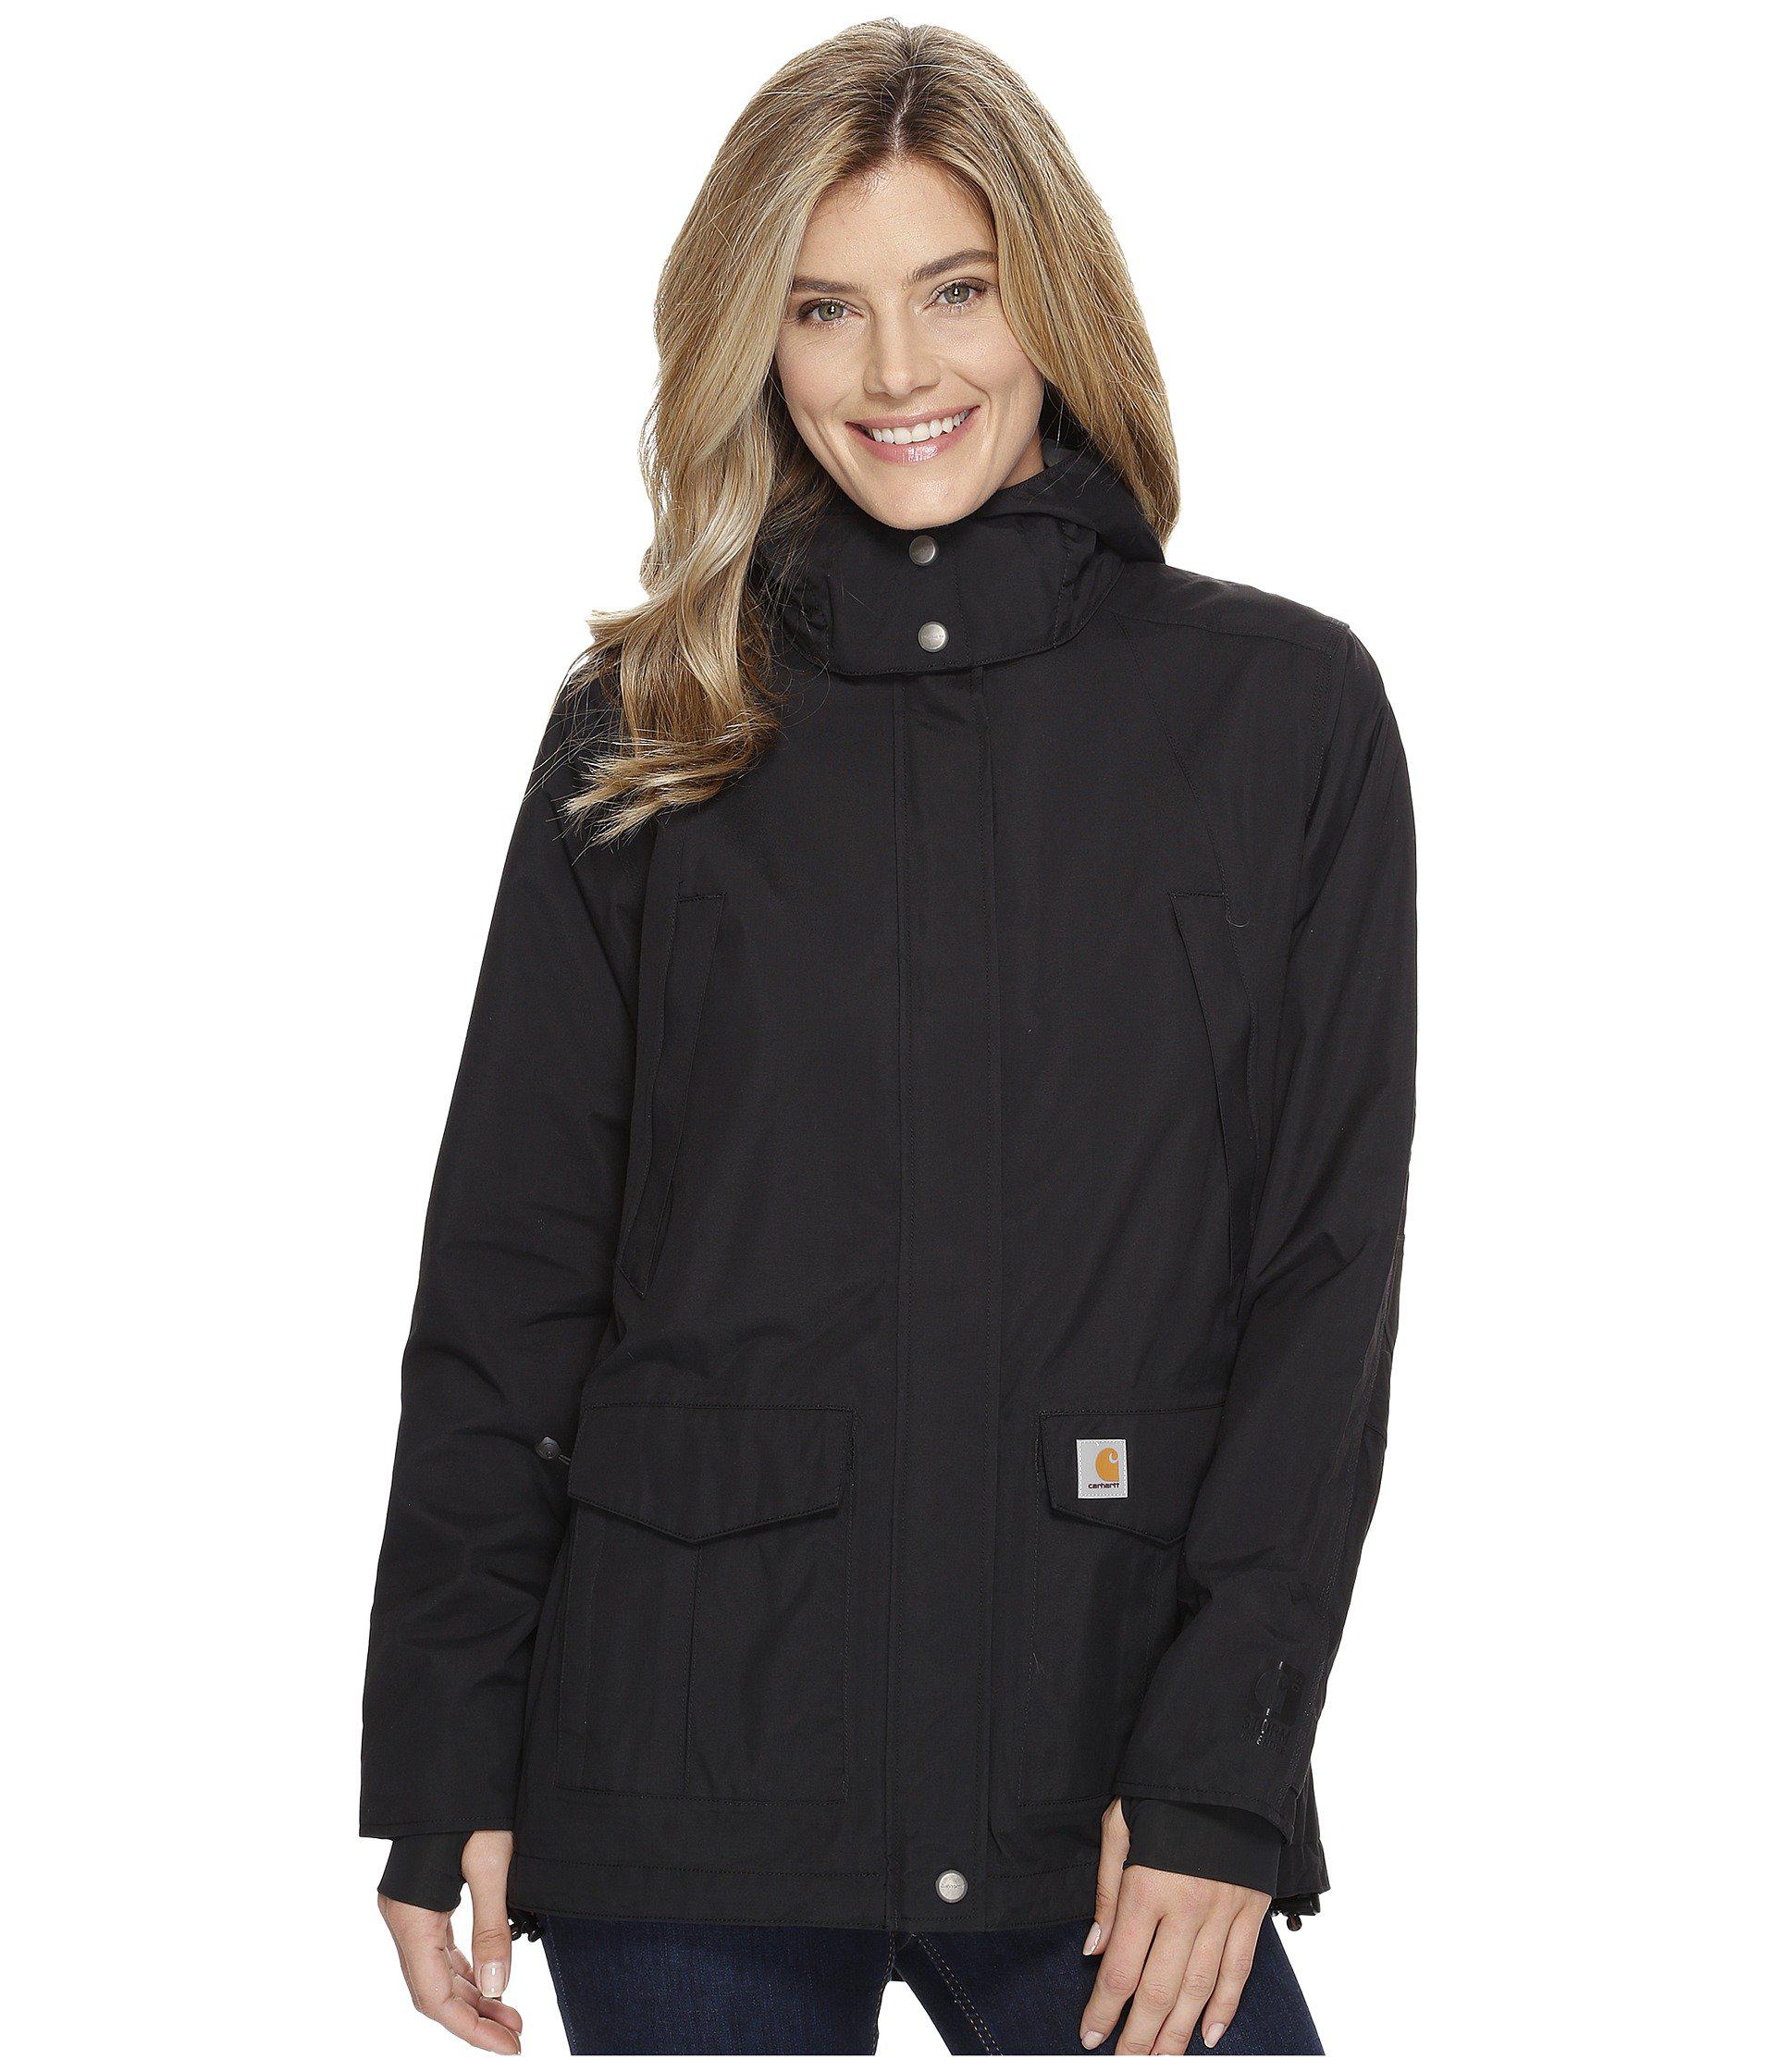 Lyst - Carhartt Shoreline Jacket (black) Women's Coat in Black